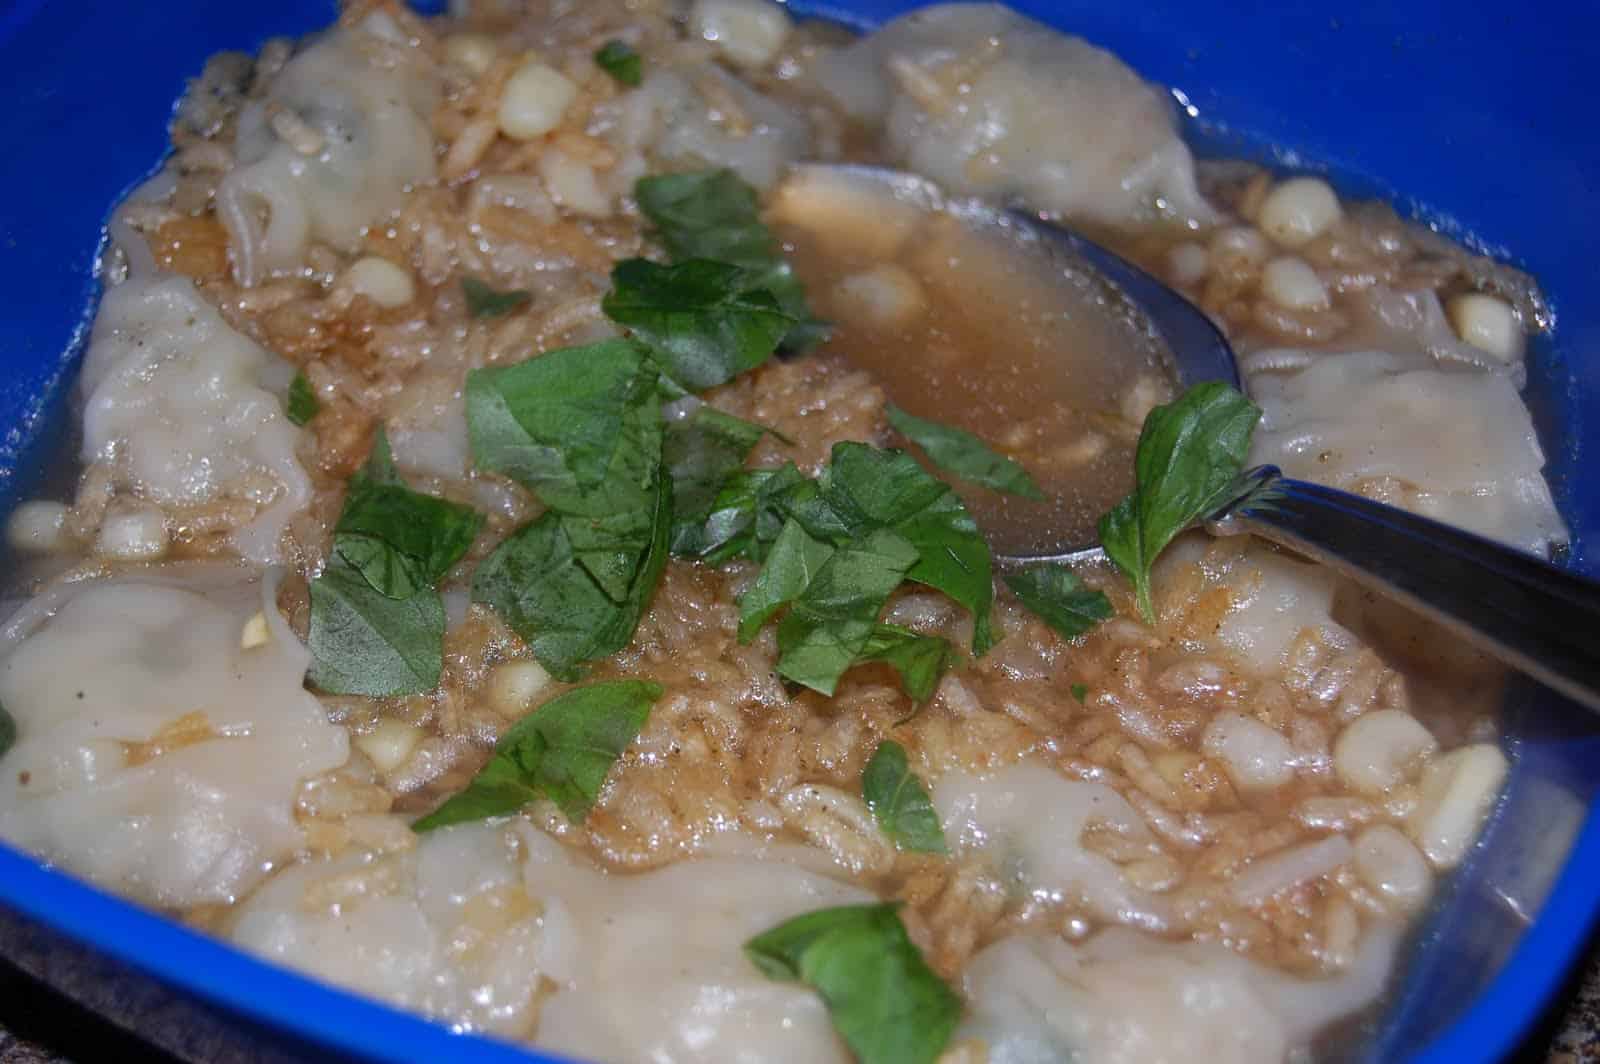 Sizzling rice soup with wonton dumplings